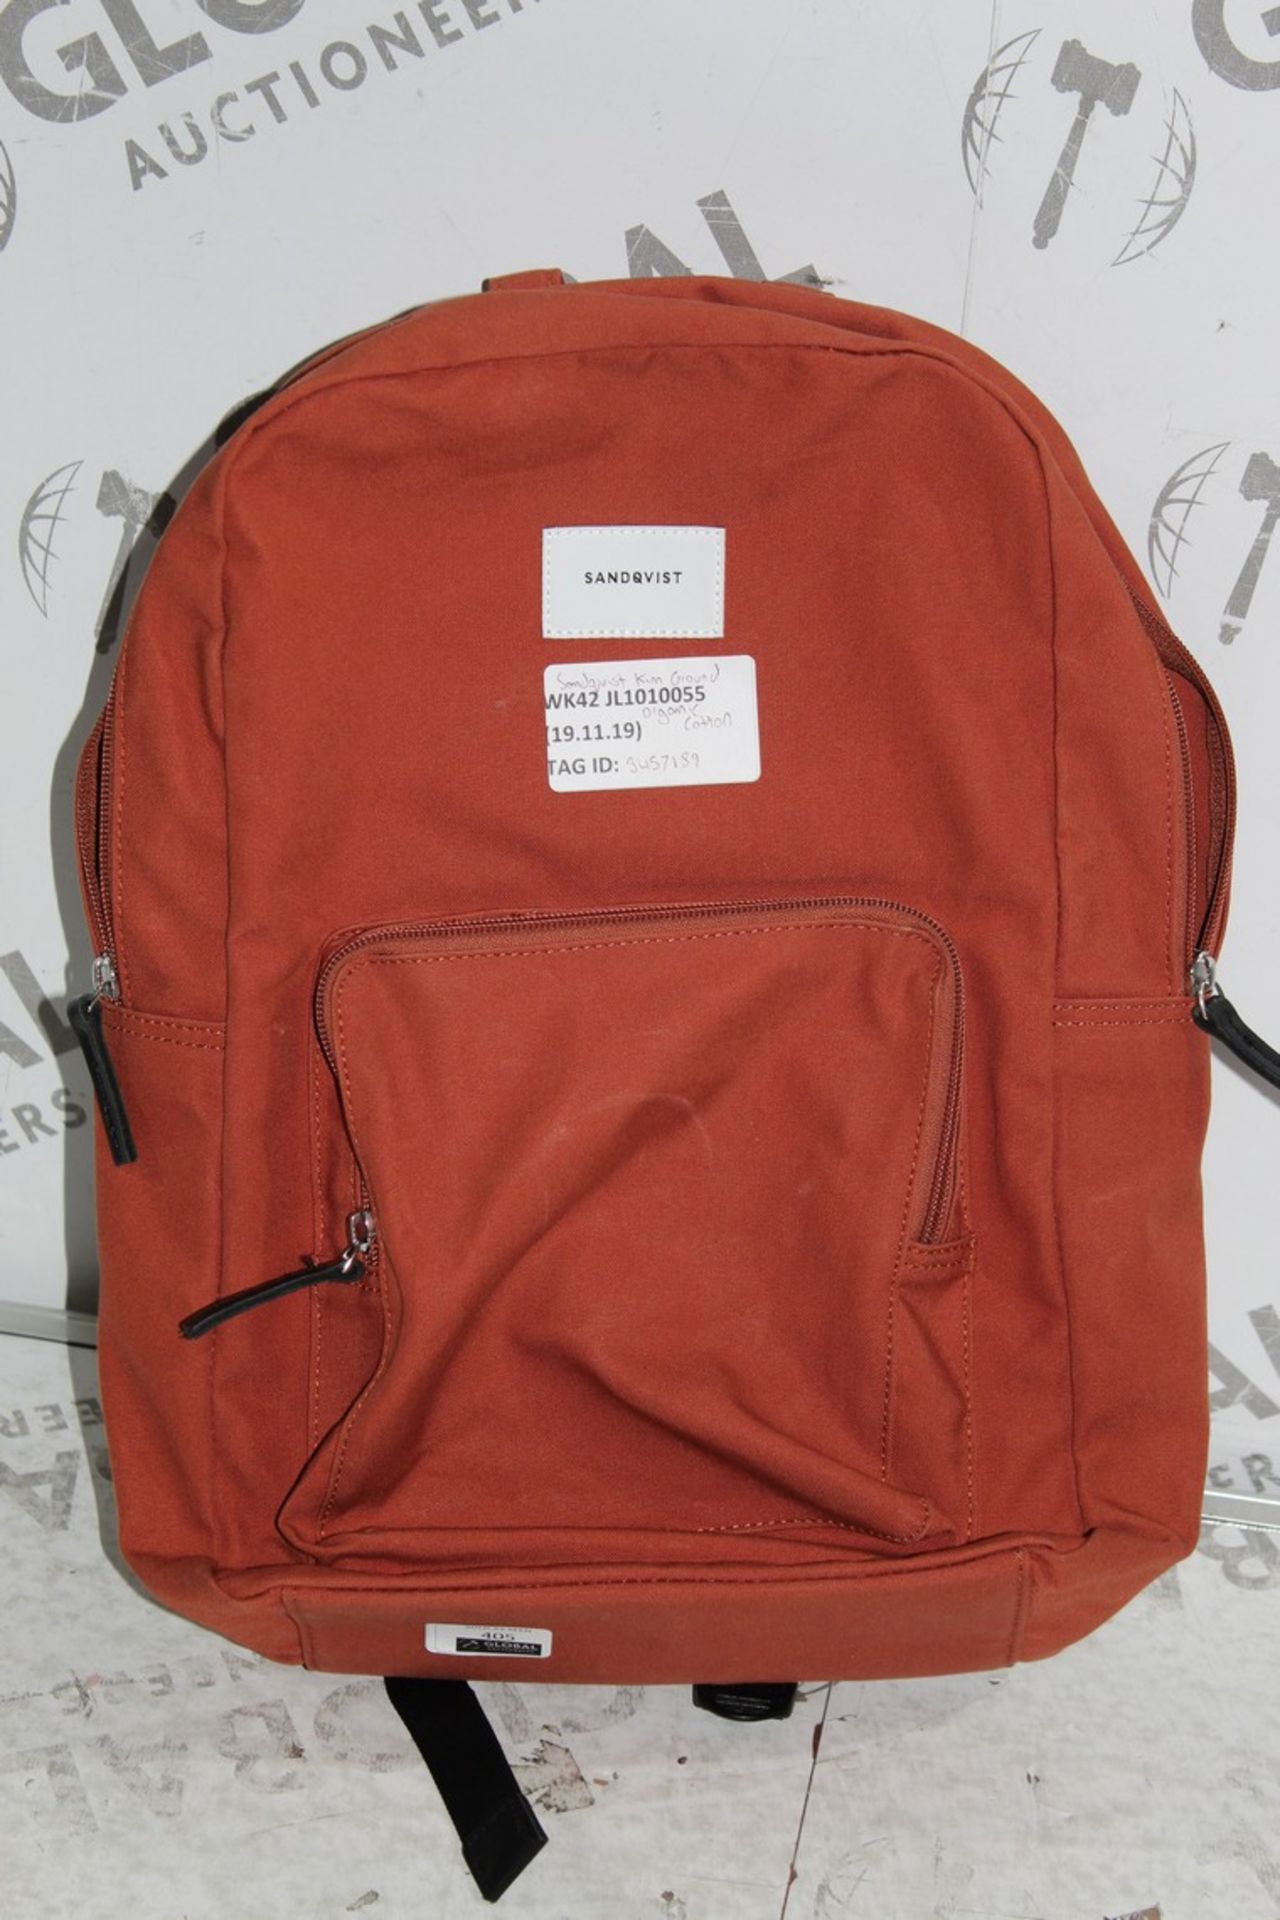 Sandqvist Burnt Orange Laptop Rucksack Bag (3457189) (Public Viewing and Appraisals Available)